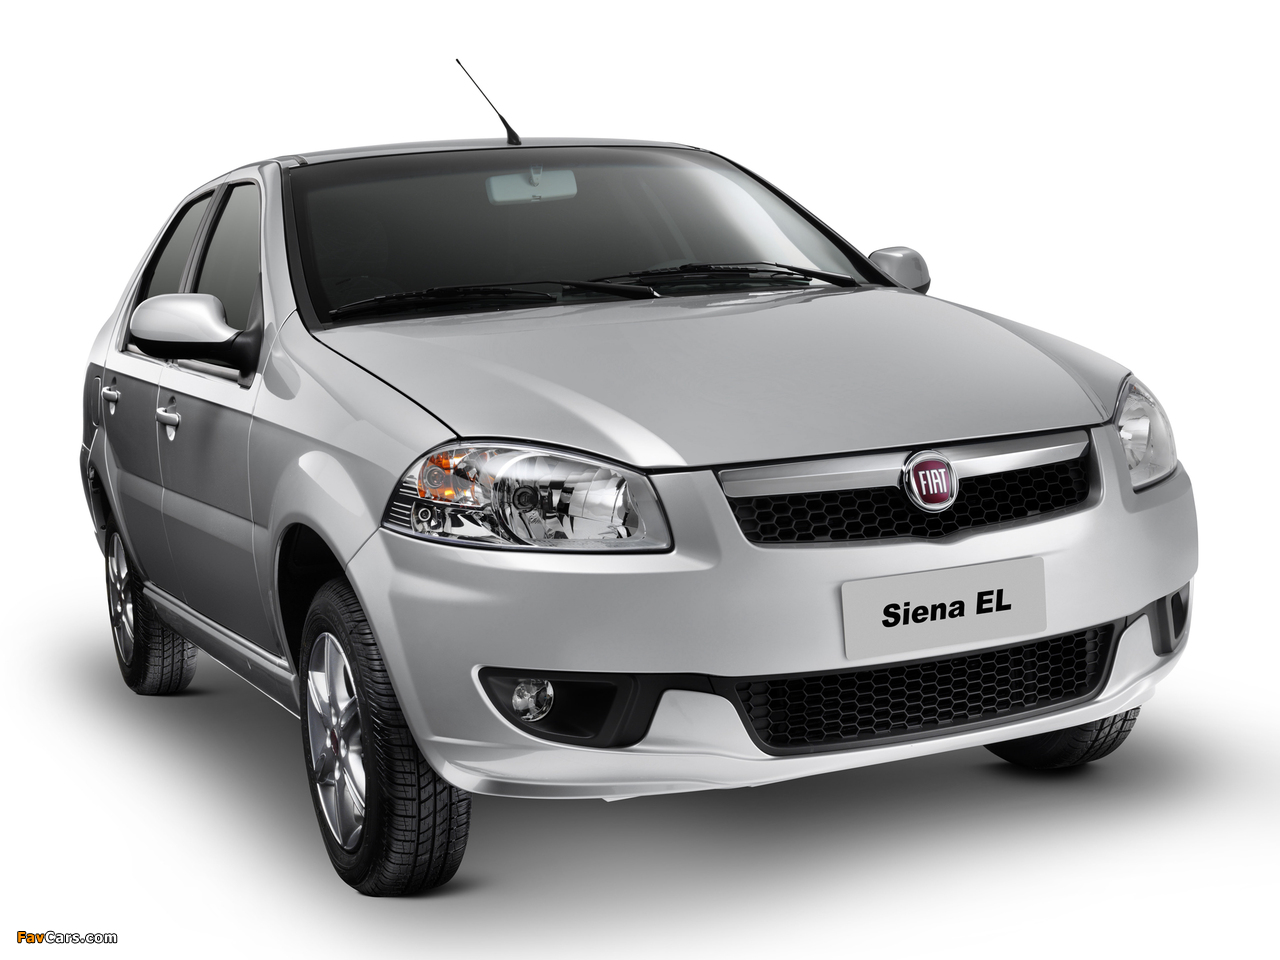 Fiat Siena EL (178) 2012 images (1280 x 960)